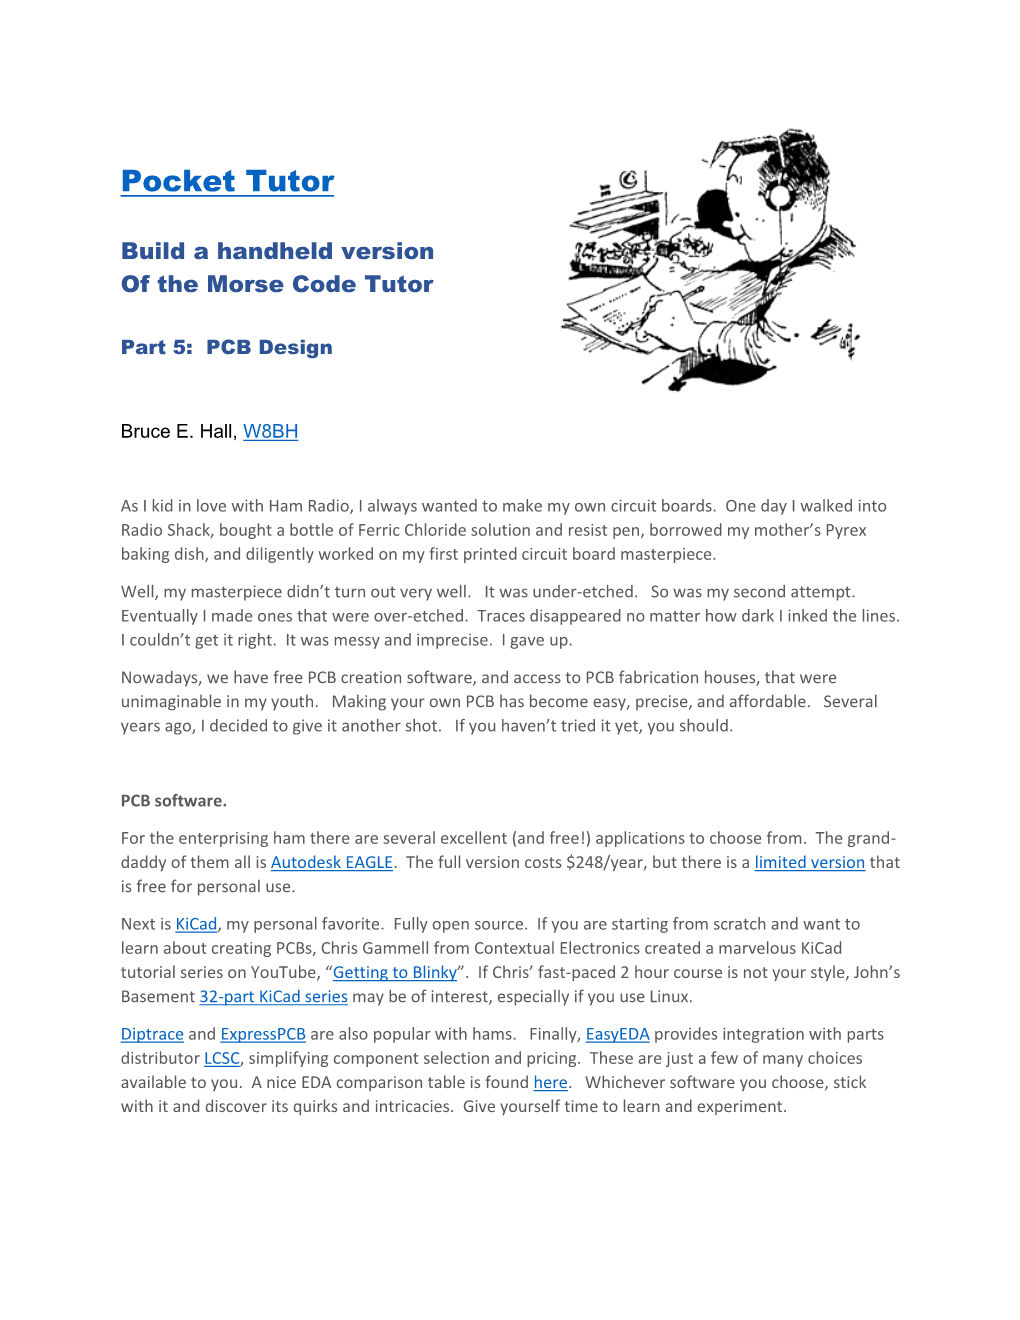 Pocket Tutor, Part 5: PCB Design